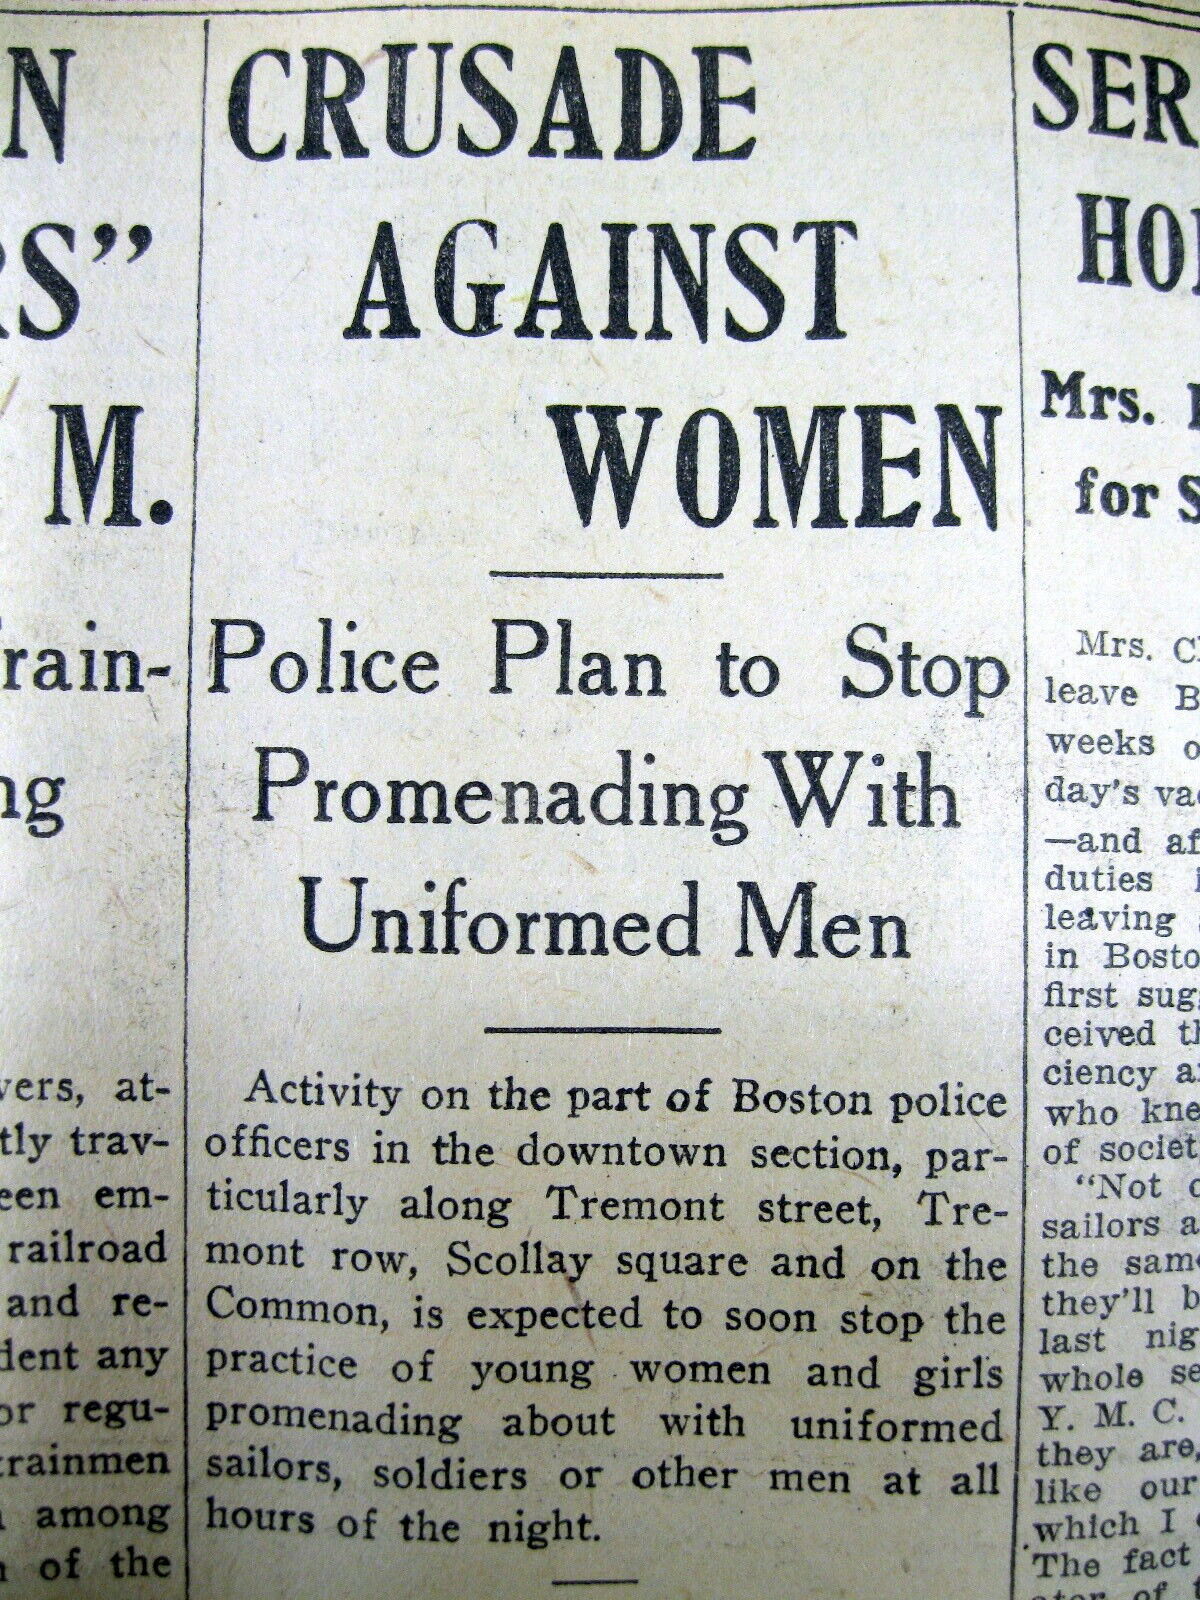 1917 newspaper BOSTON POLICE DEPARTMENT begins a crusade against WOMEN